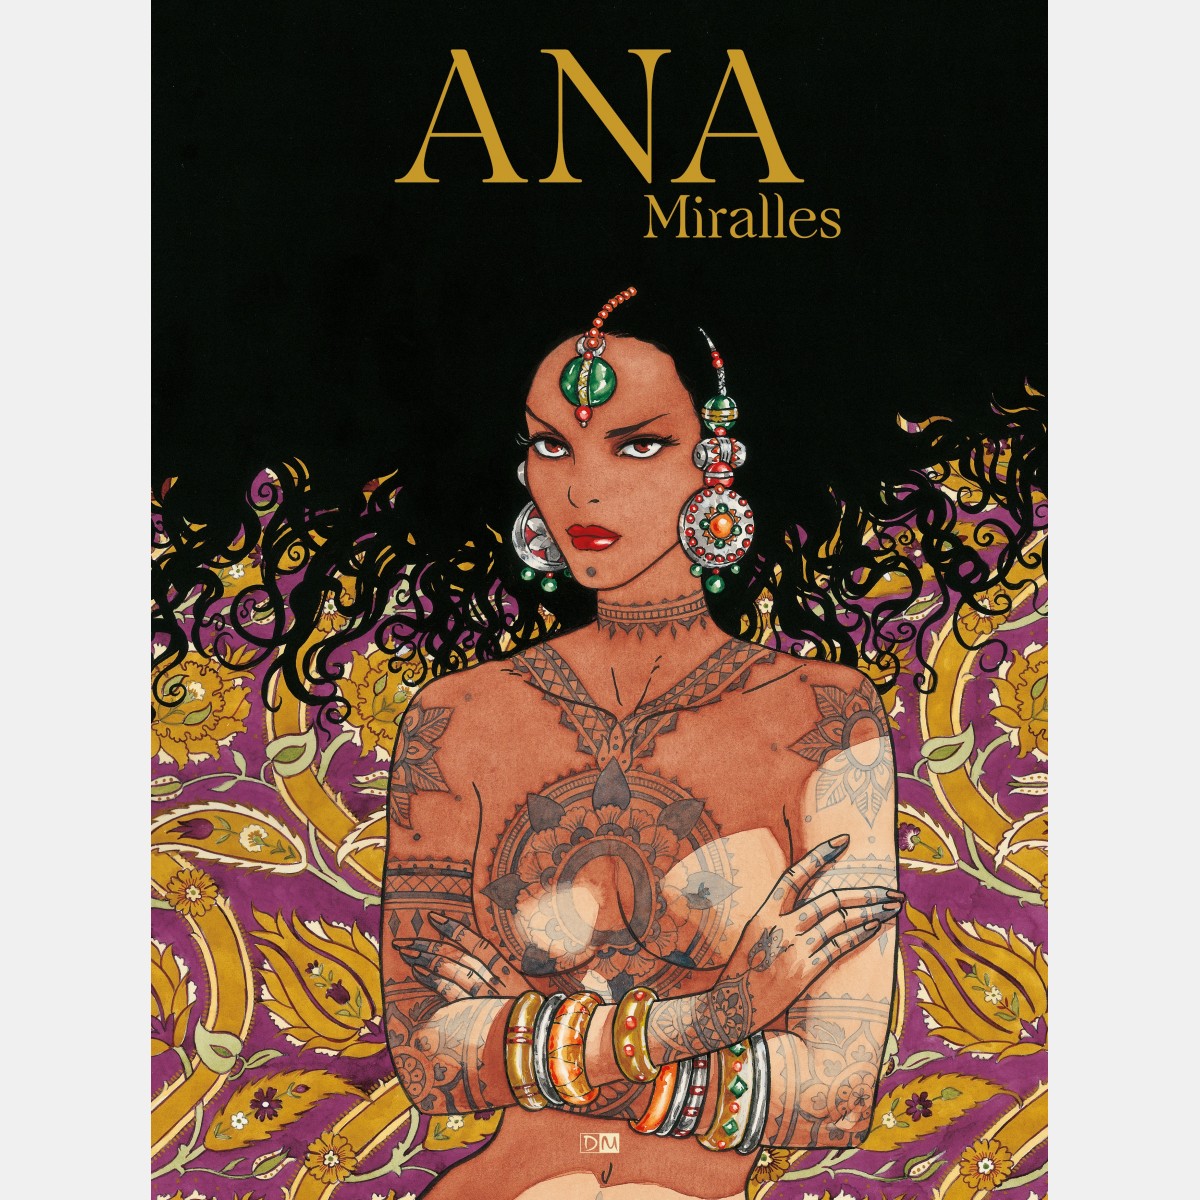 Ana Miralles - ANA (French)